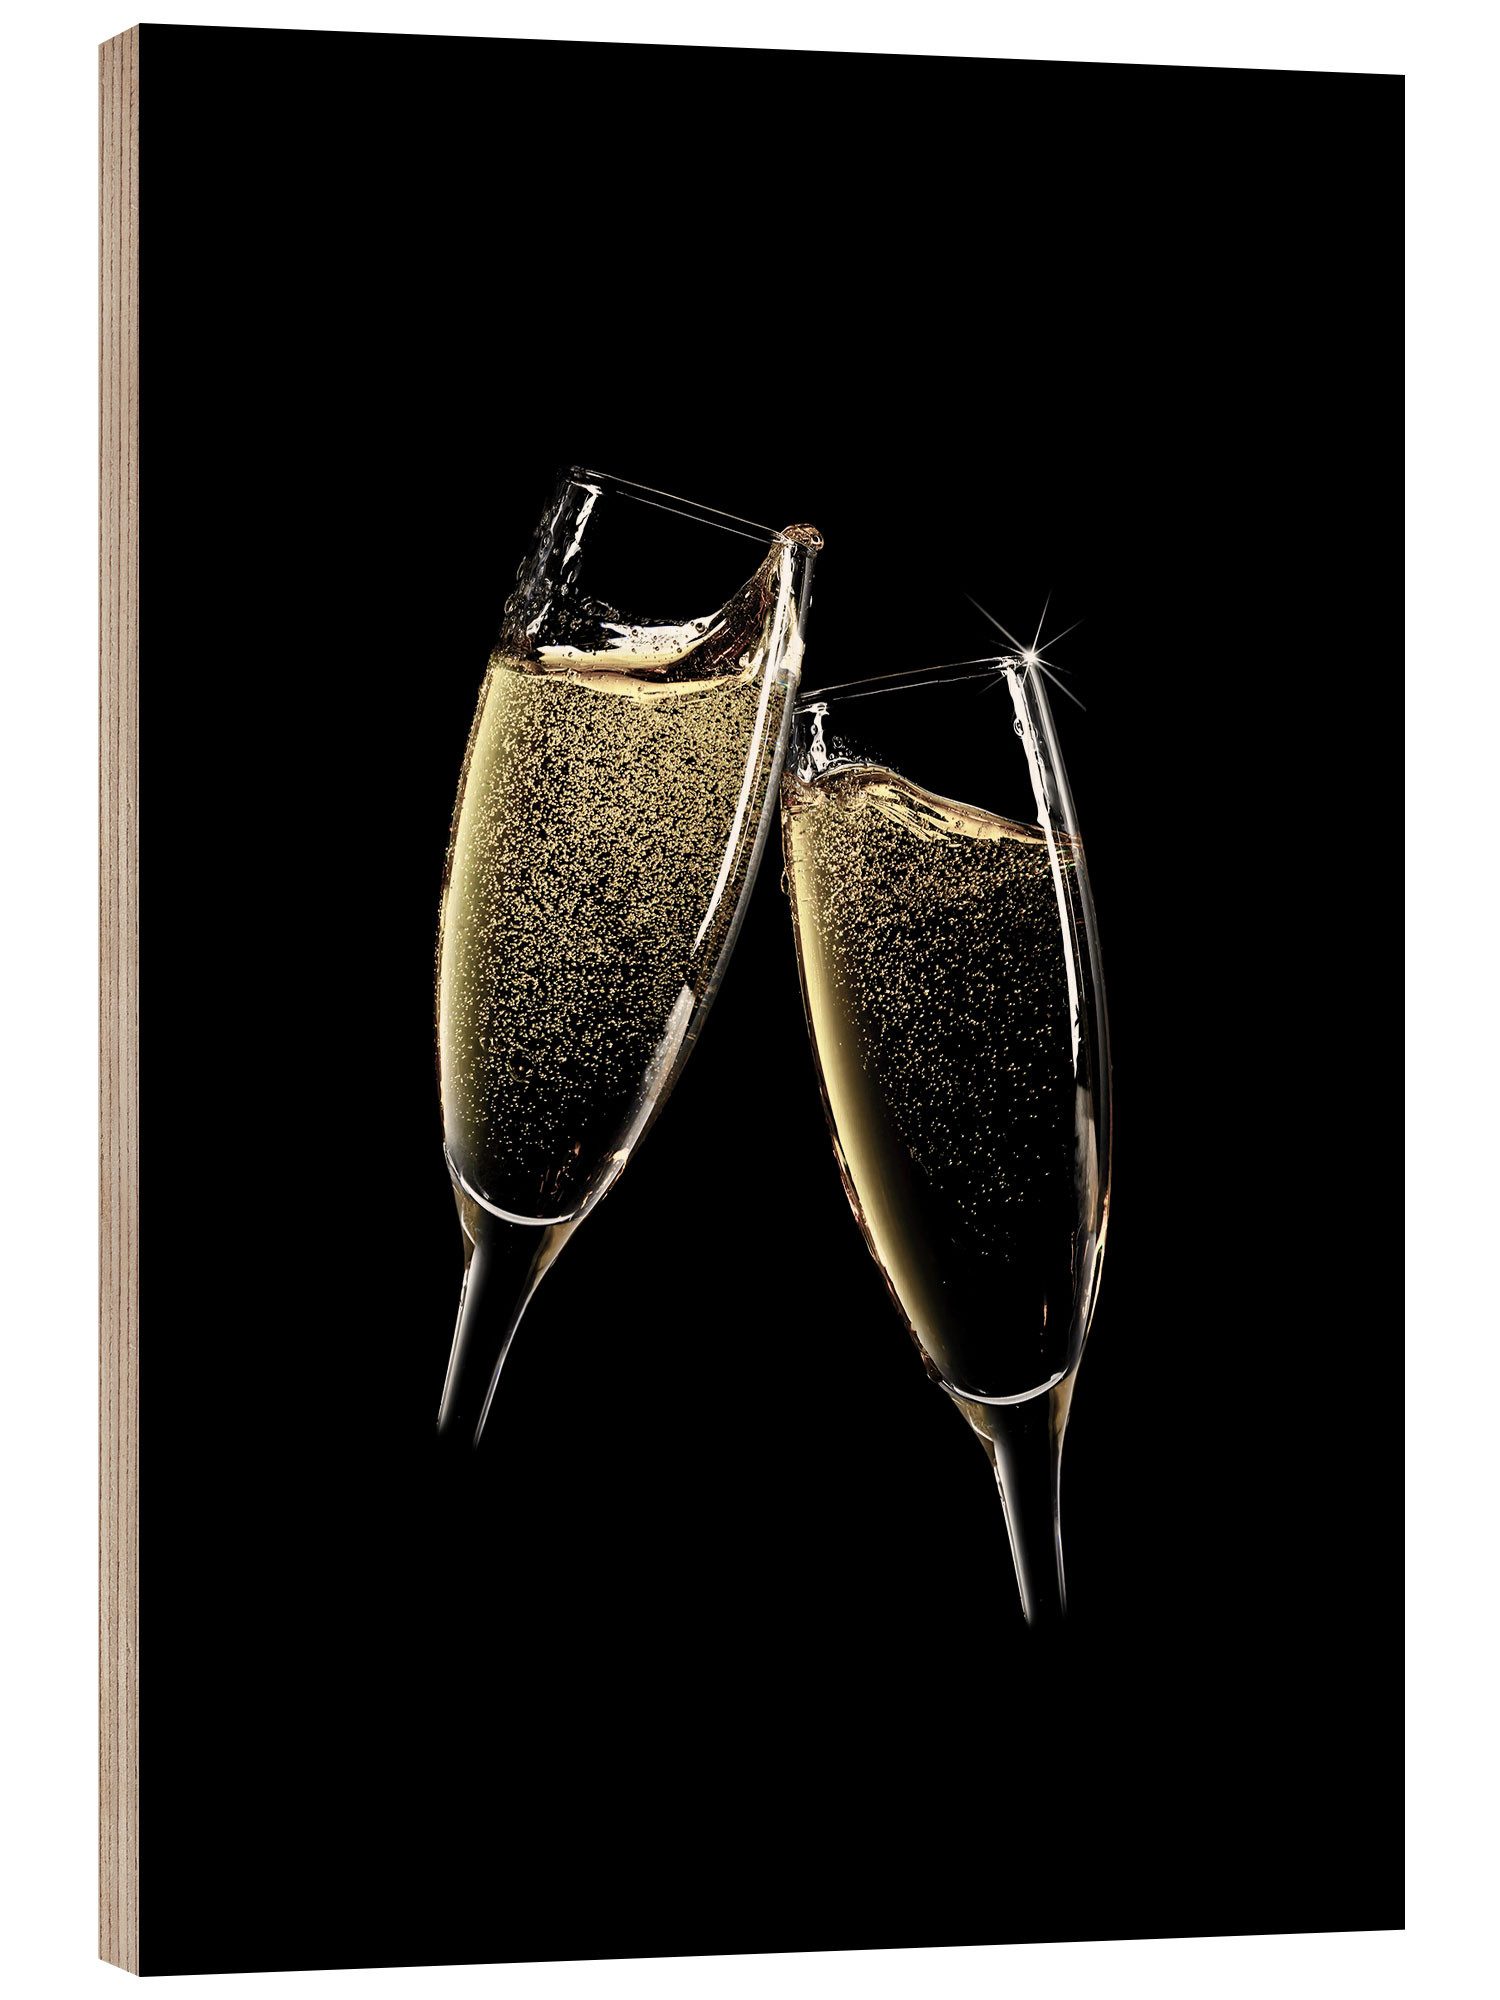 Posterlounge Holzbild Editors Choice, Prost! Zwei Champagner Gläser, Bar Fotografie